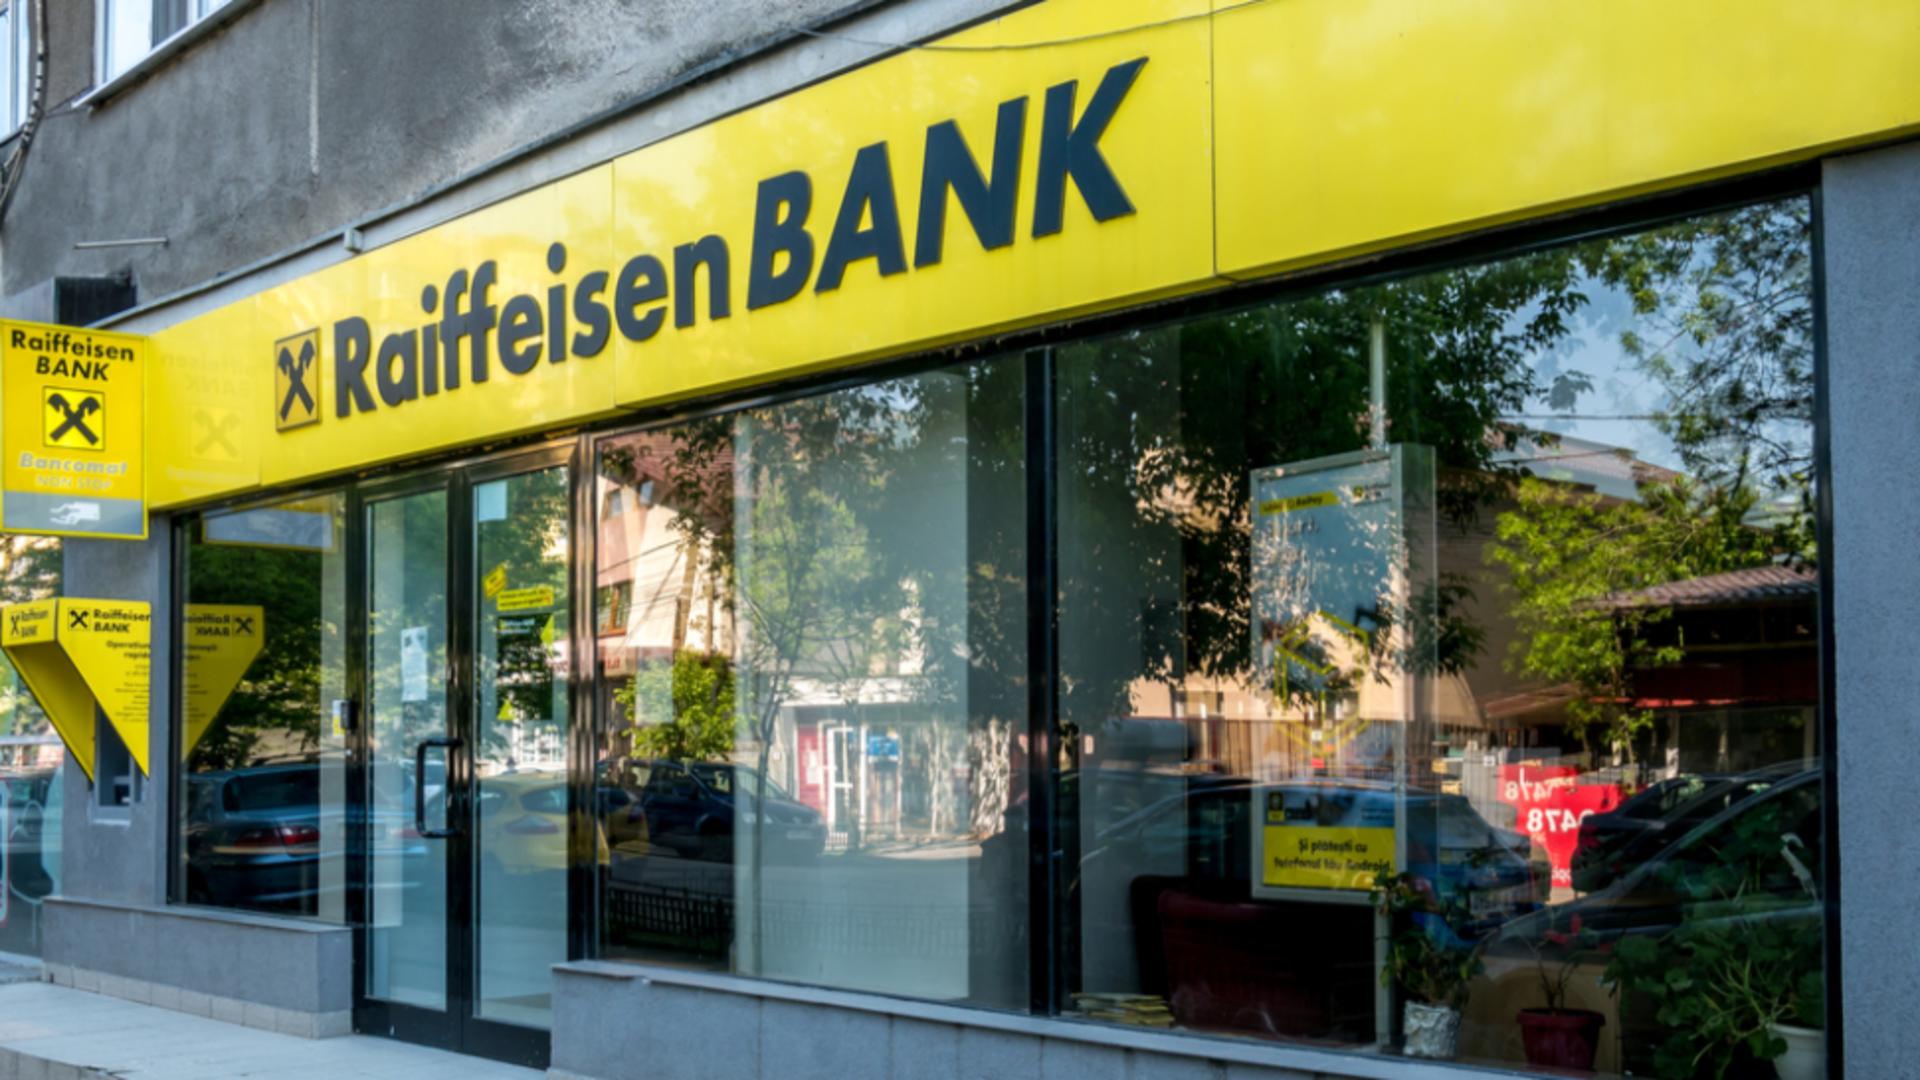 Raiffeisen Bank - imagine de arhivă